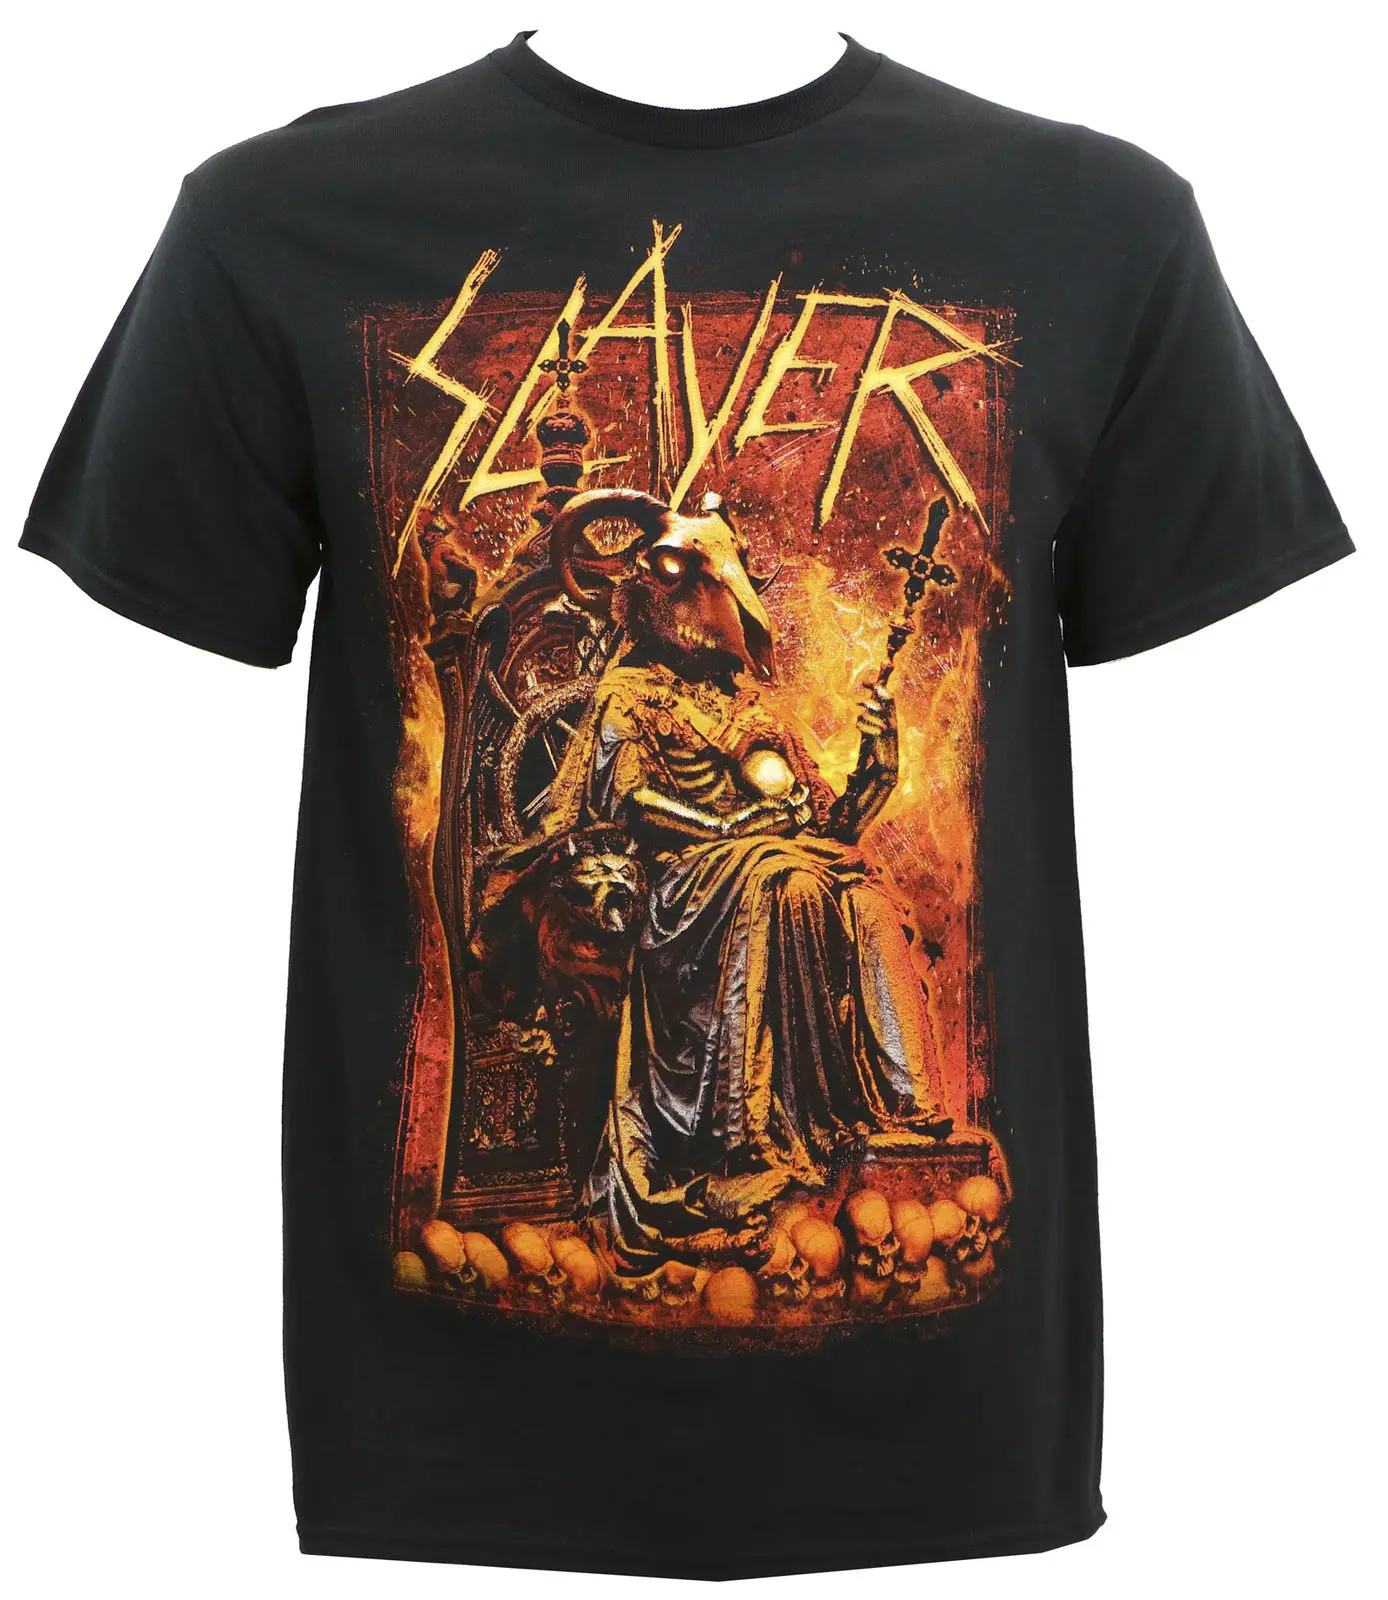 

Authentic Slayer Band Rib Goat Thrash Metal T Shirt S M L Xl 2Xl Newmen T Shirts Short